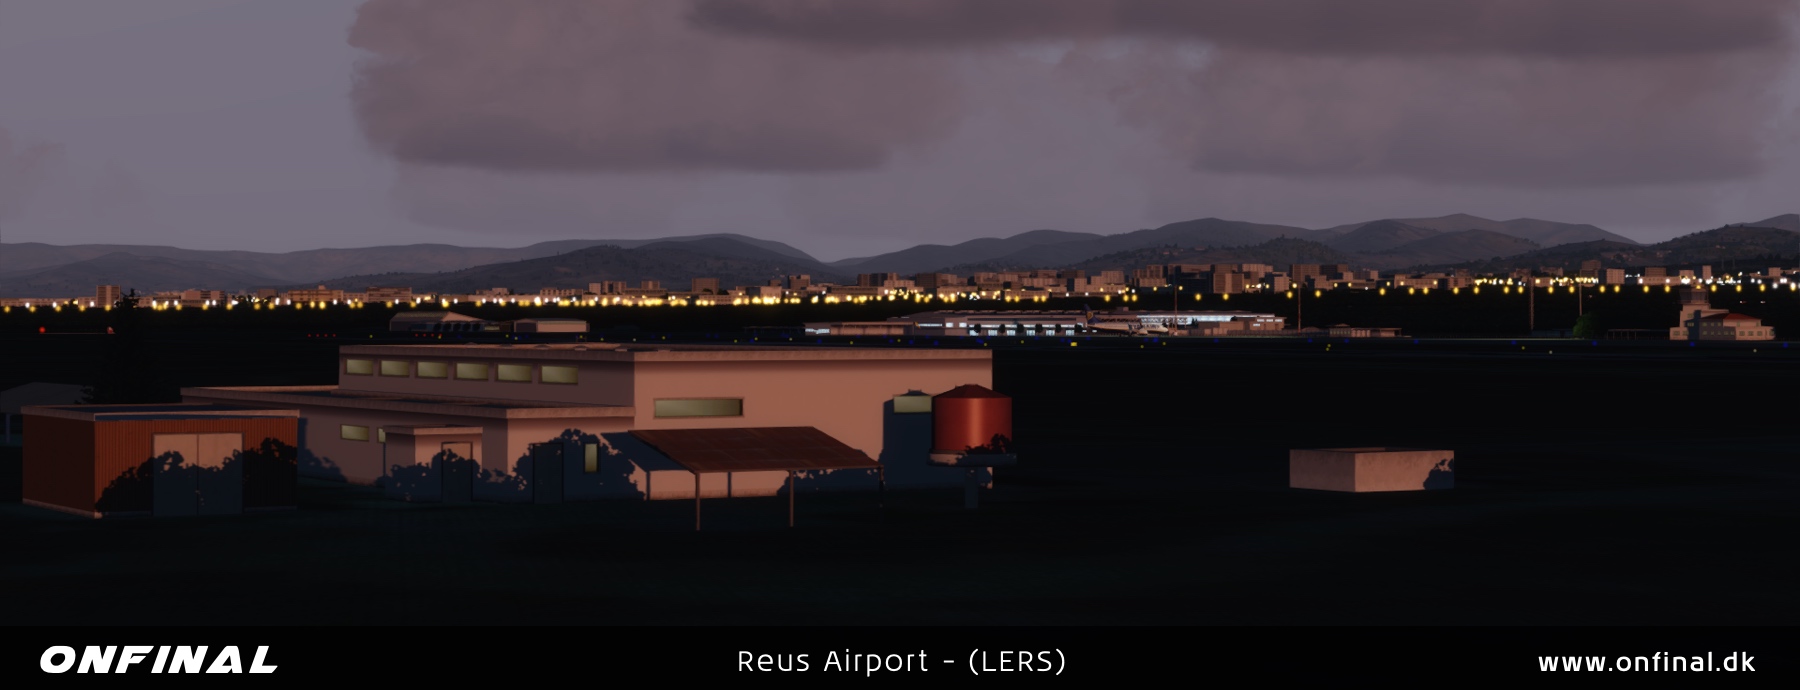 Reus Airport LERS Overview Night P3D Scenery